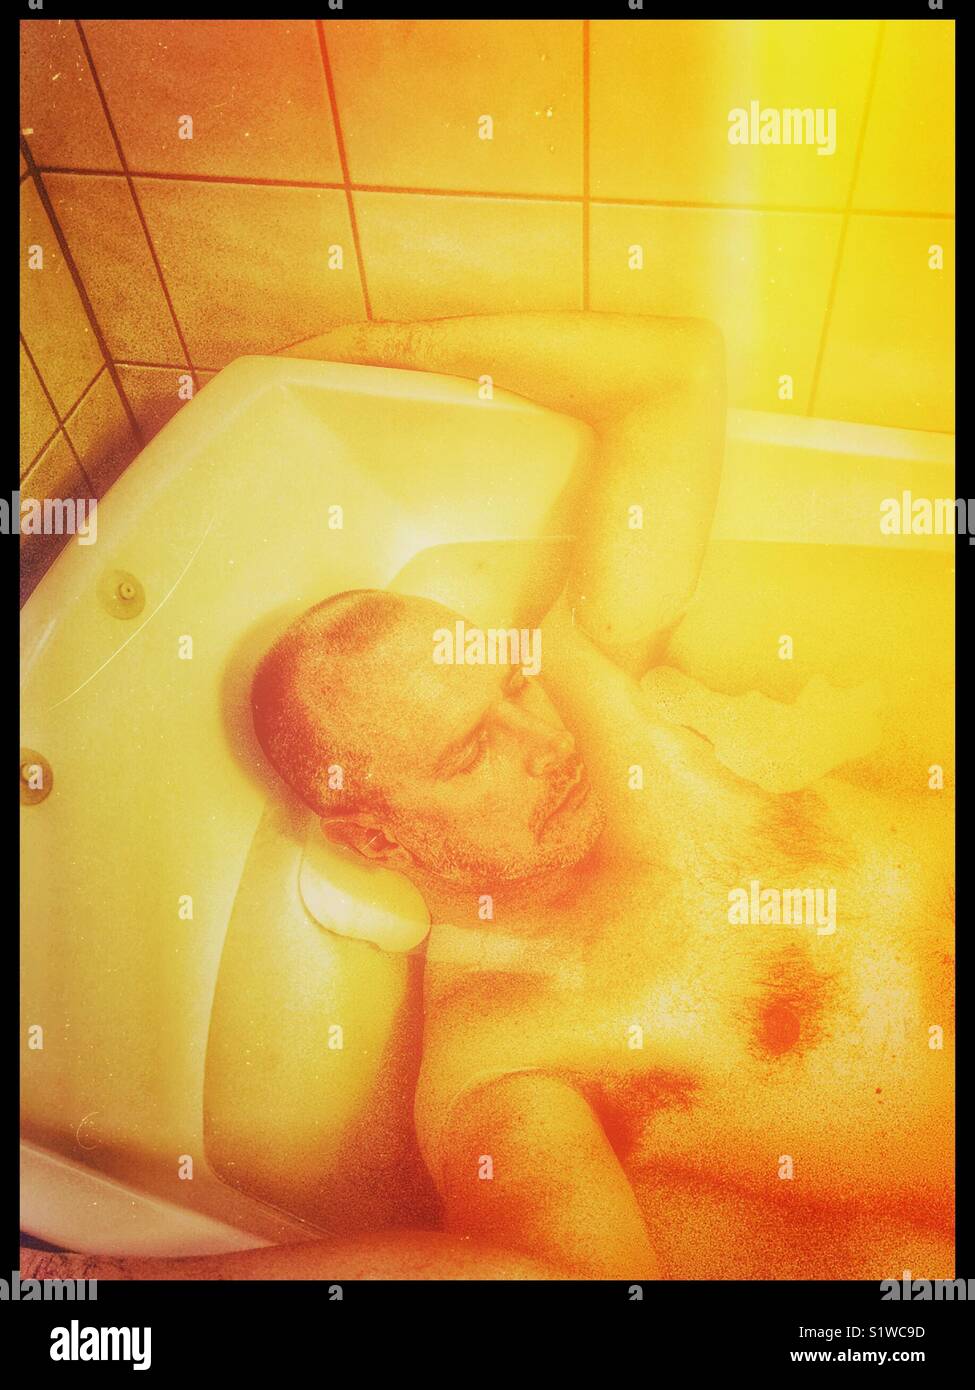 Middle aged Scandinavian man asleep in the bath Stock Photo